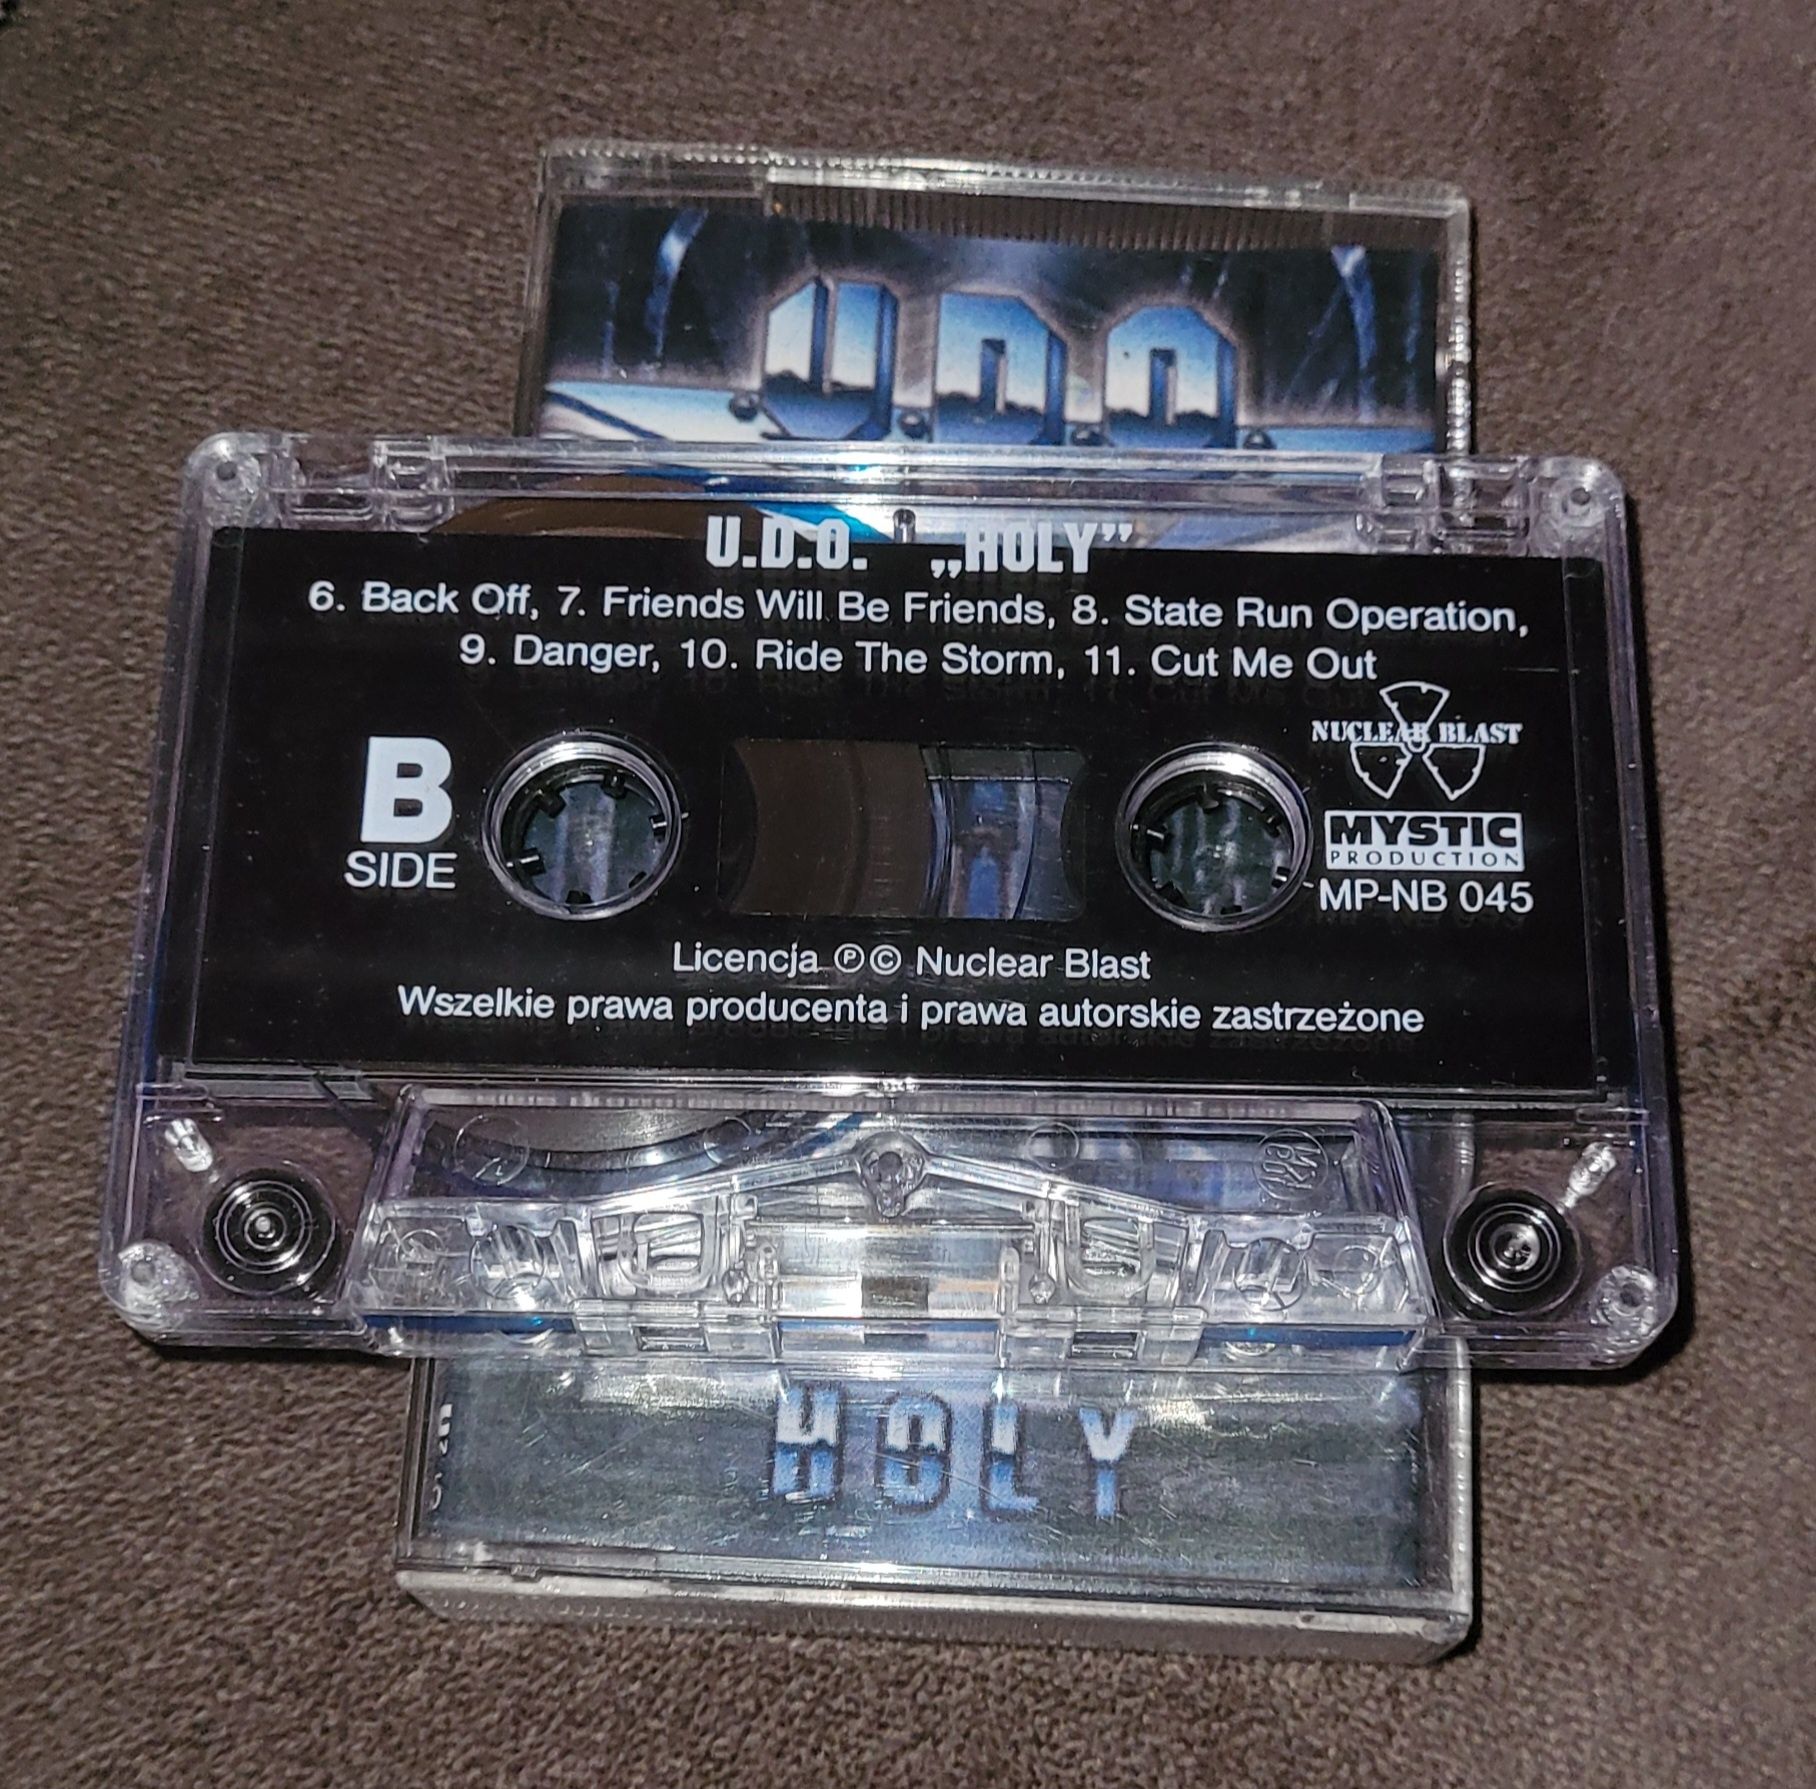 U.D.O. – Holy, kaseta magnetofonowa, heavy metal, rock